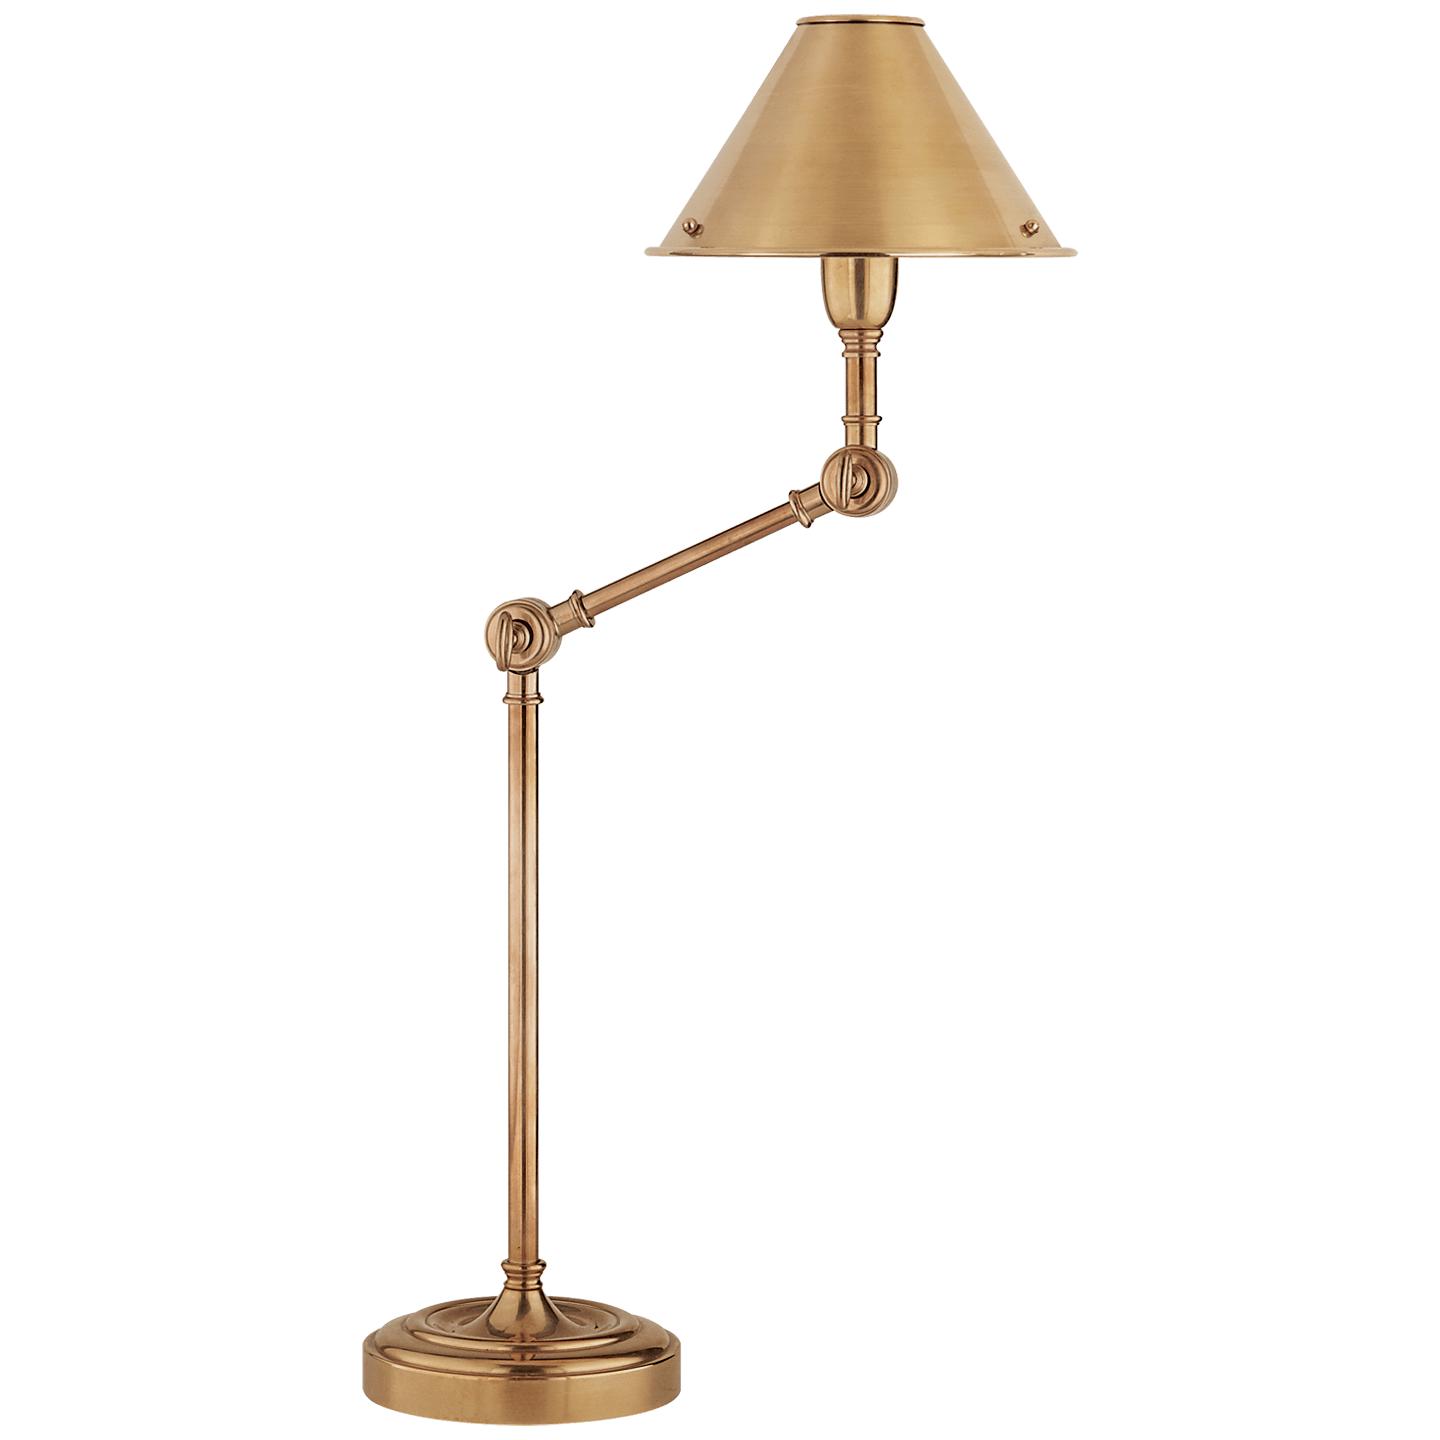 Купить Настольная лампа Anette Table Lamp в интернет-магазине roooms.ru